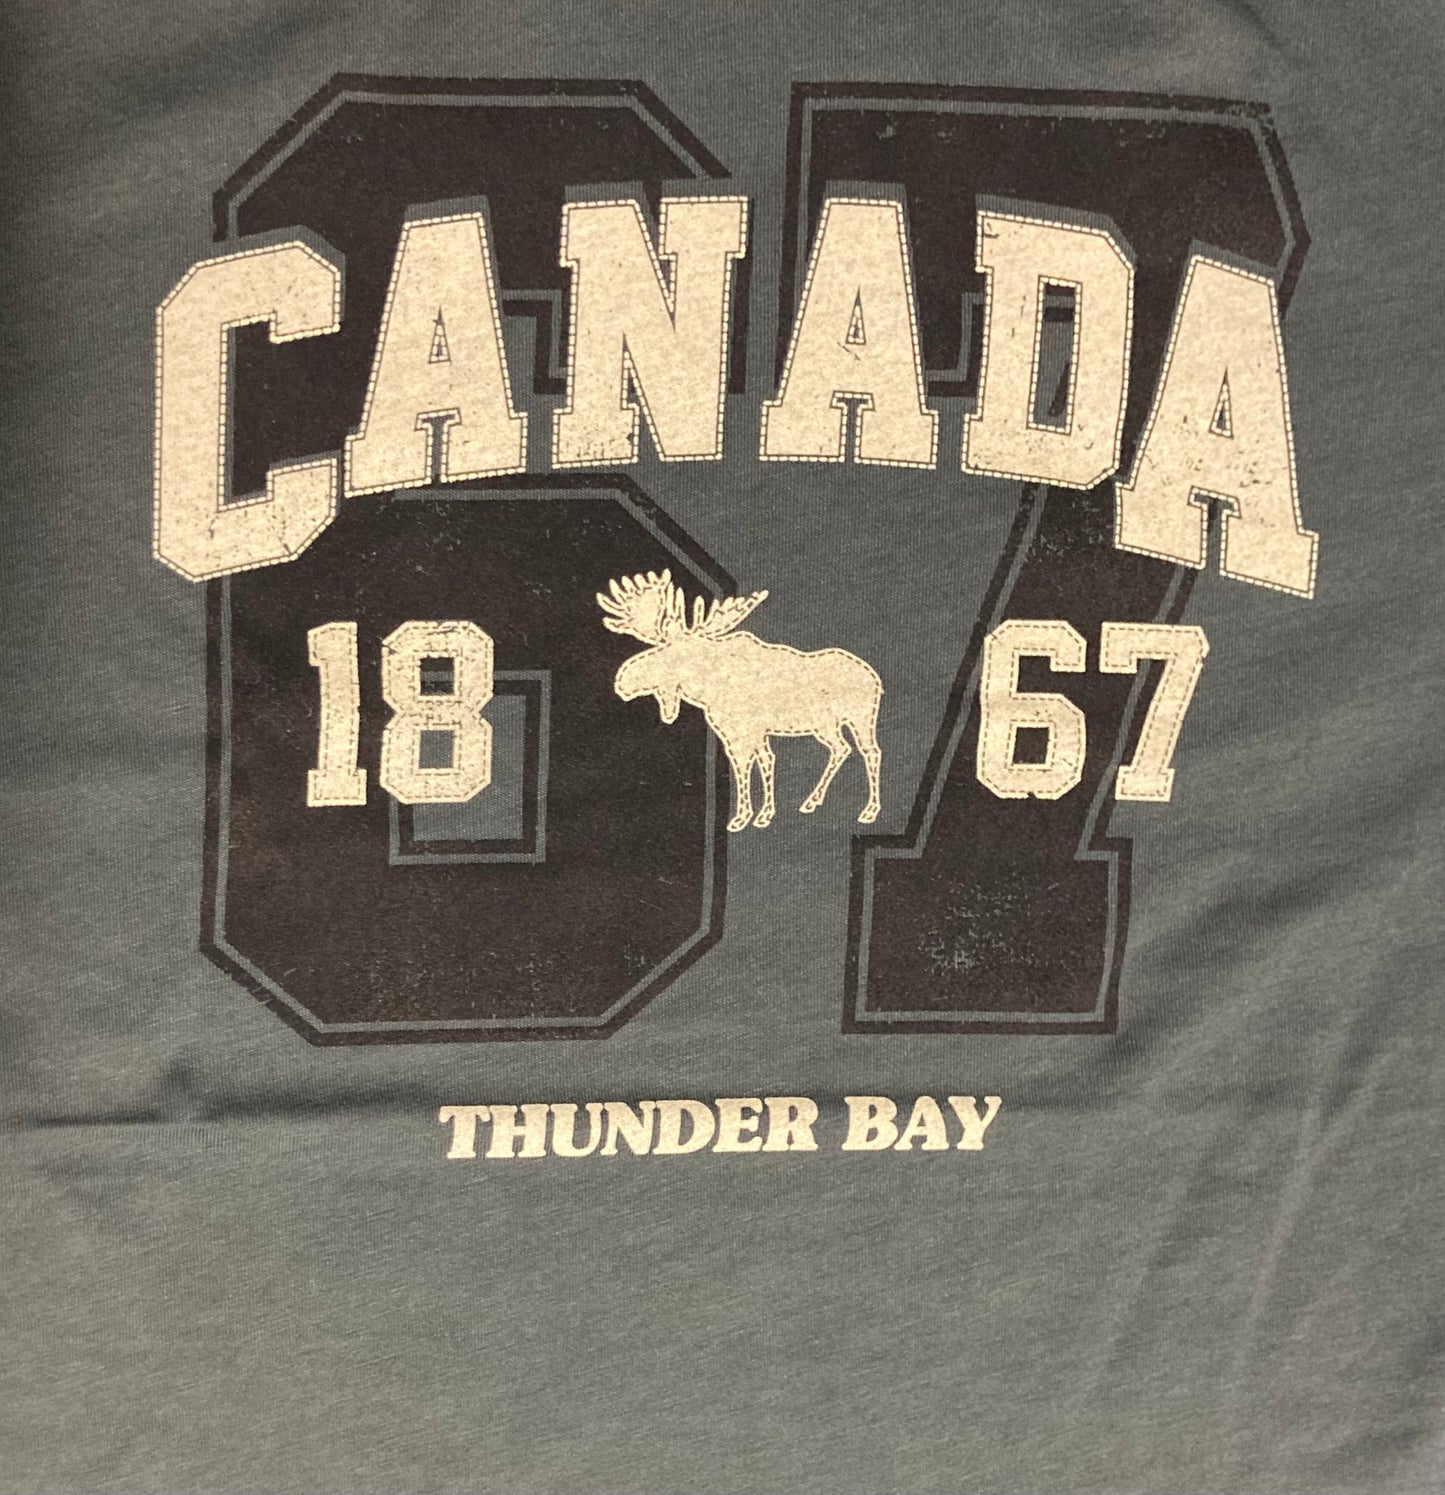 Souvenir Clothing - Men's Denim T-Shirt - Thunder Bay, Canada 1867